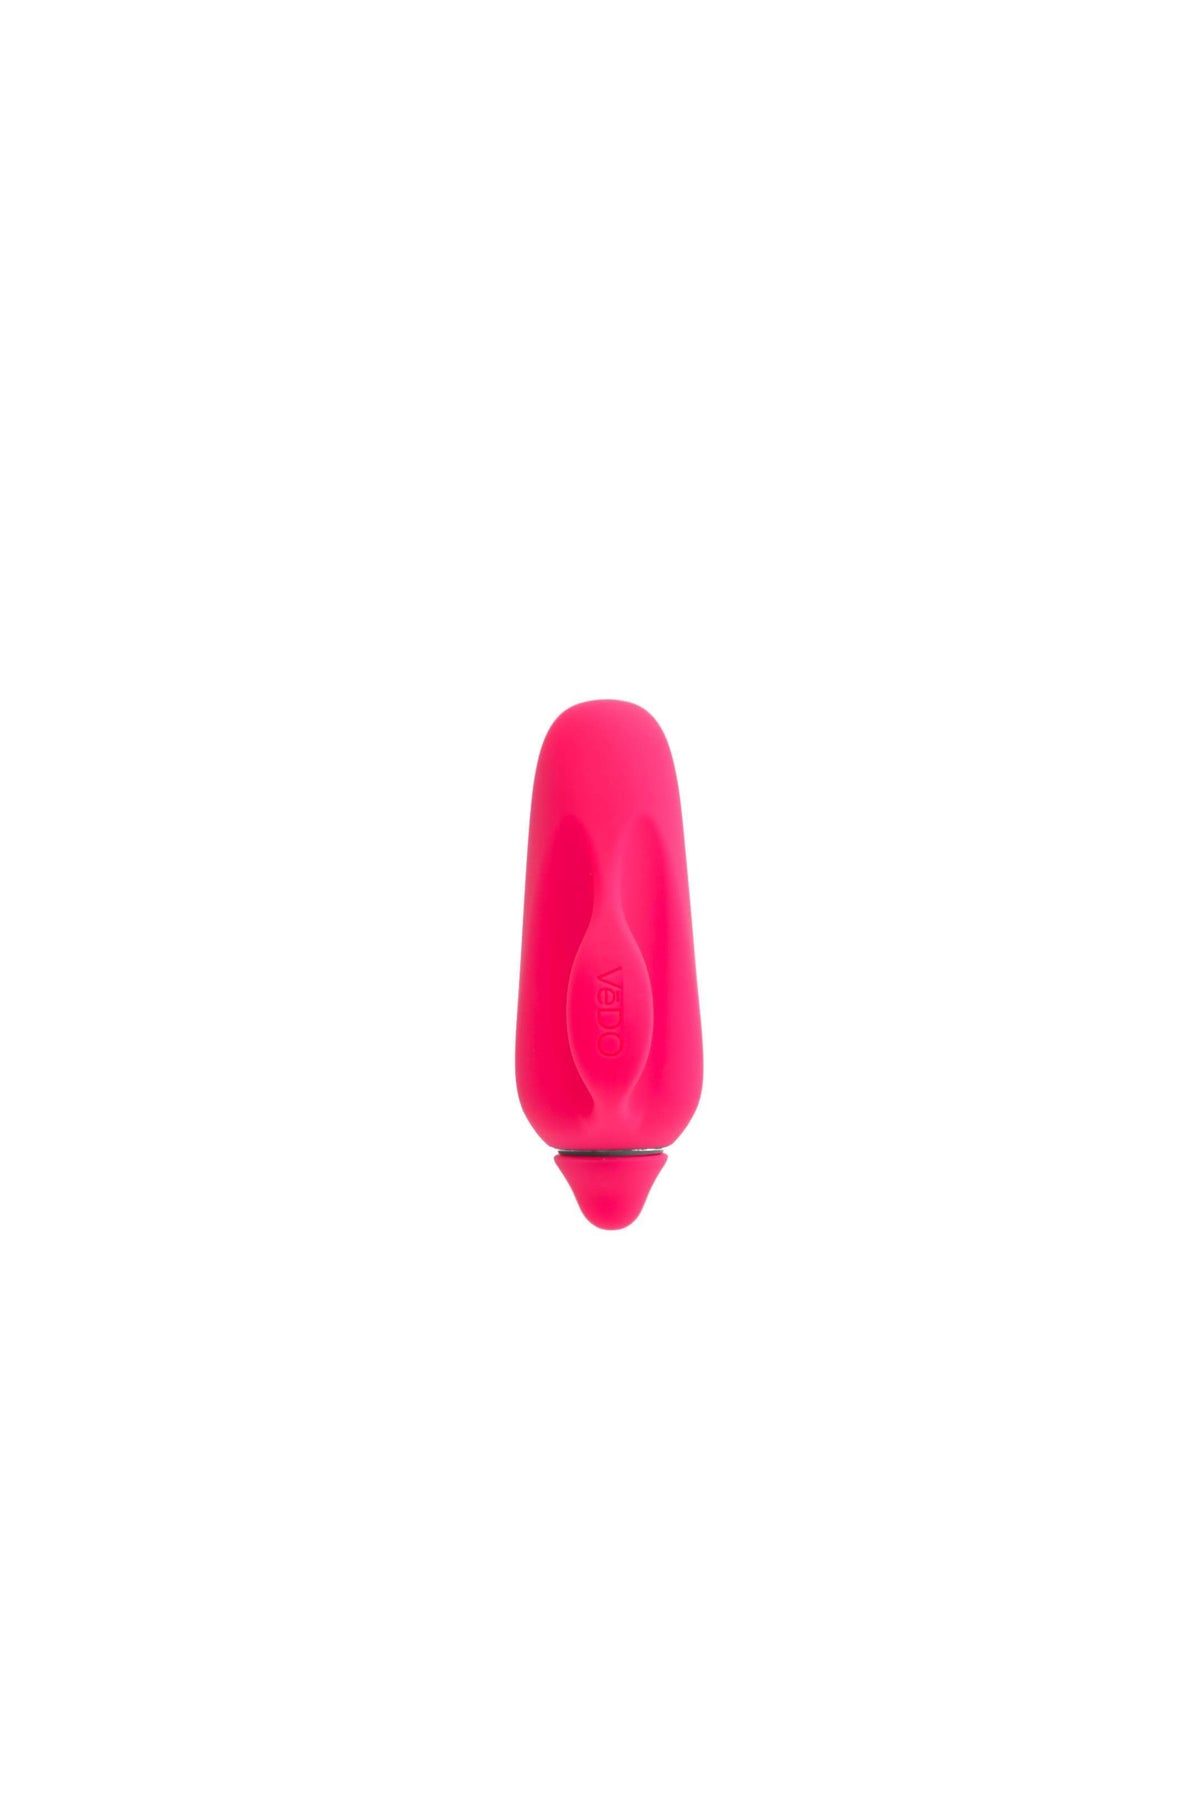 vivi rechargeable finger vibe pink